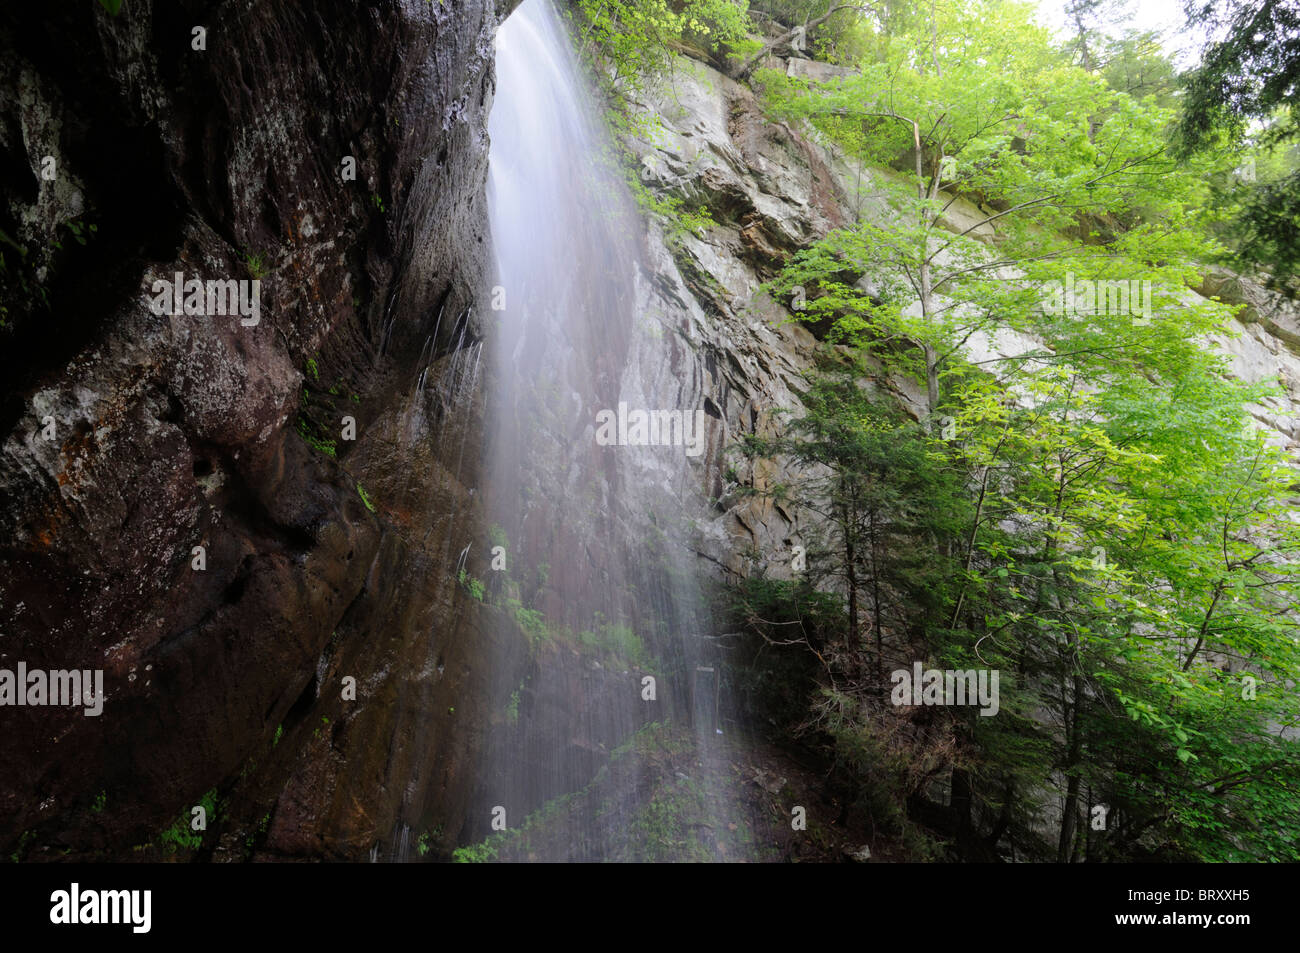 Bad ramo cascata cade Kentucky State Nature Preserve Bad ramo Gorge pino montano Foto Stock